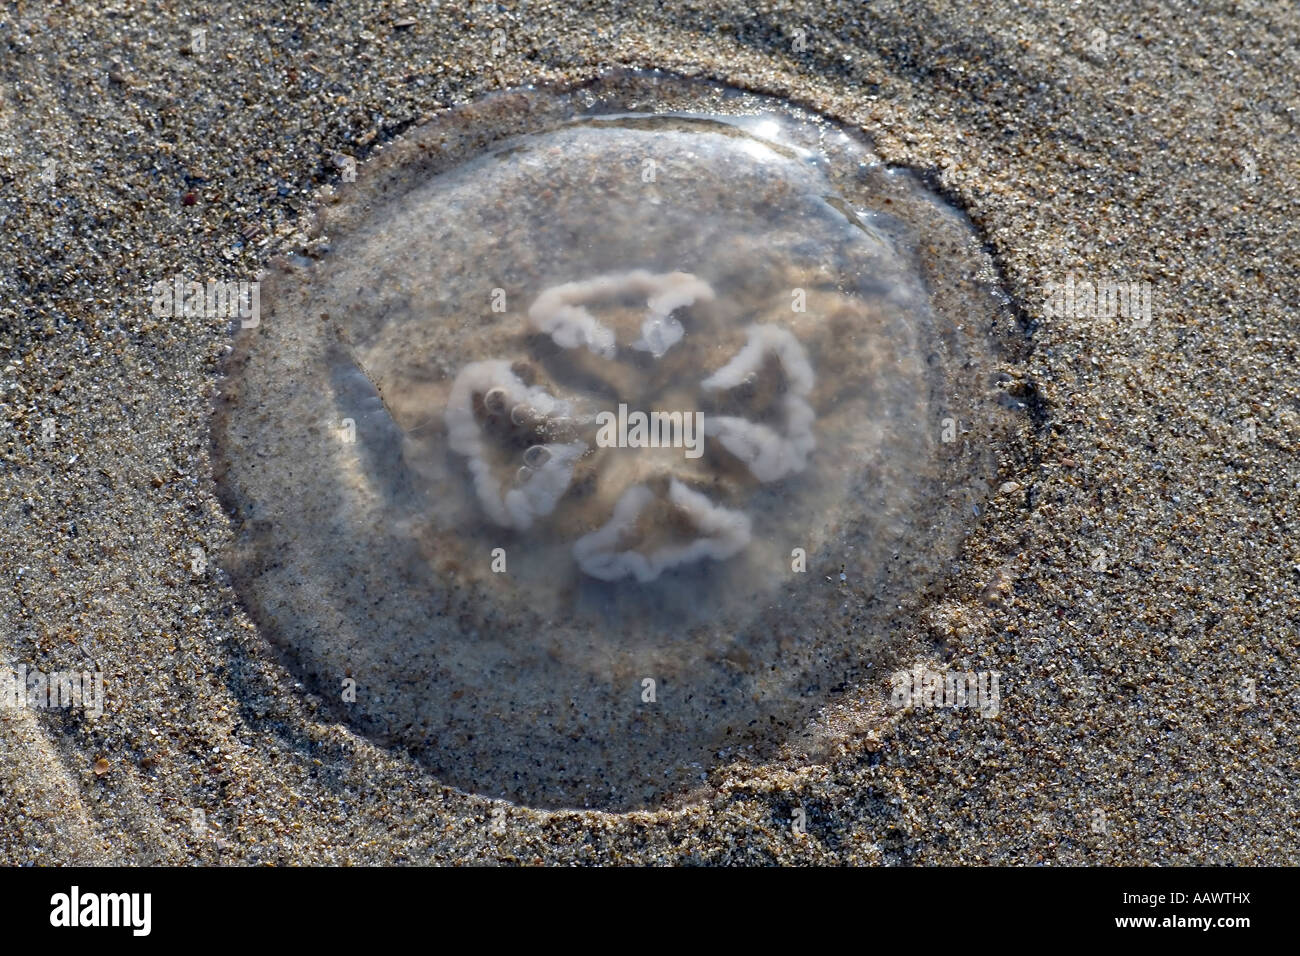 Arrastrado, medusa Aurelia aurita, Foto de stock